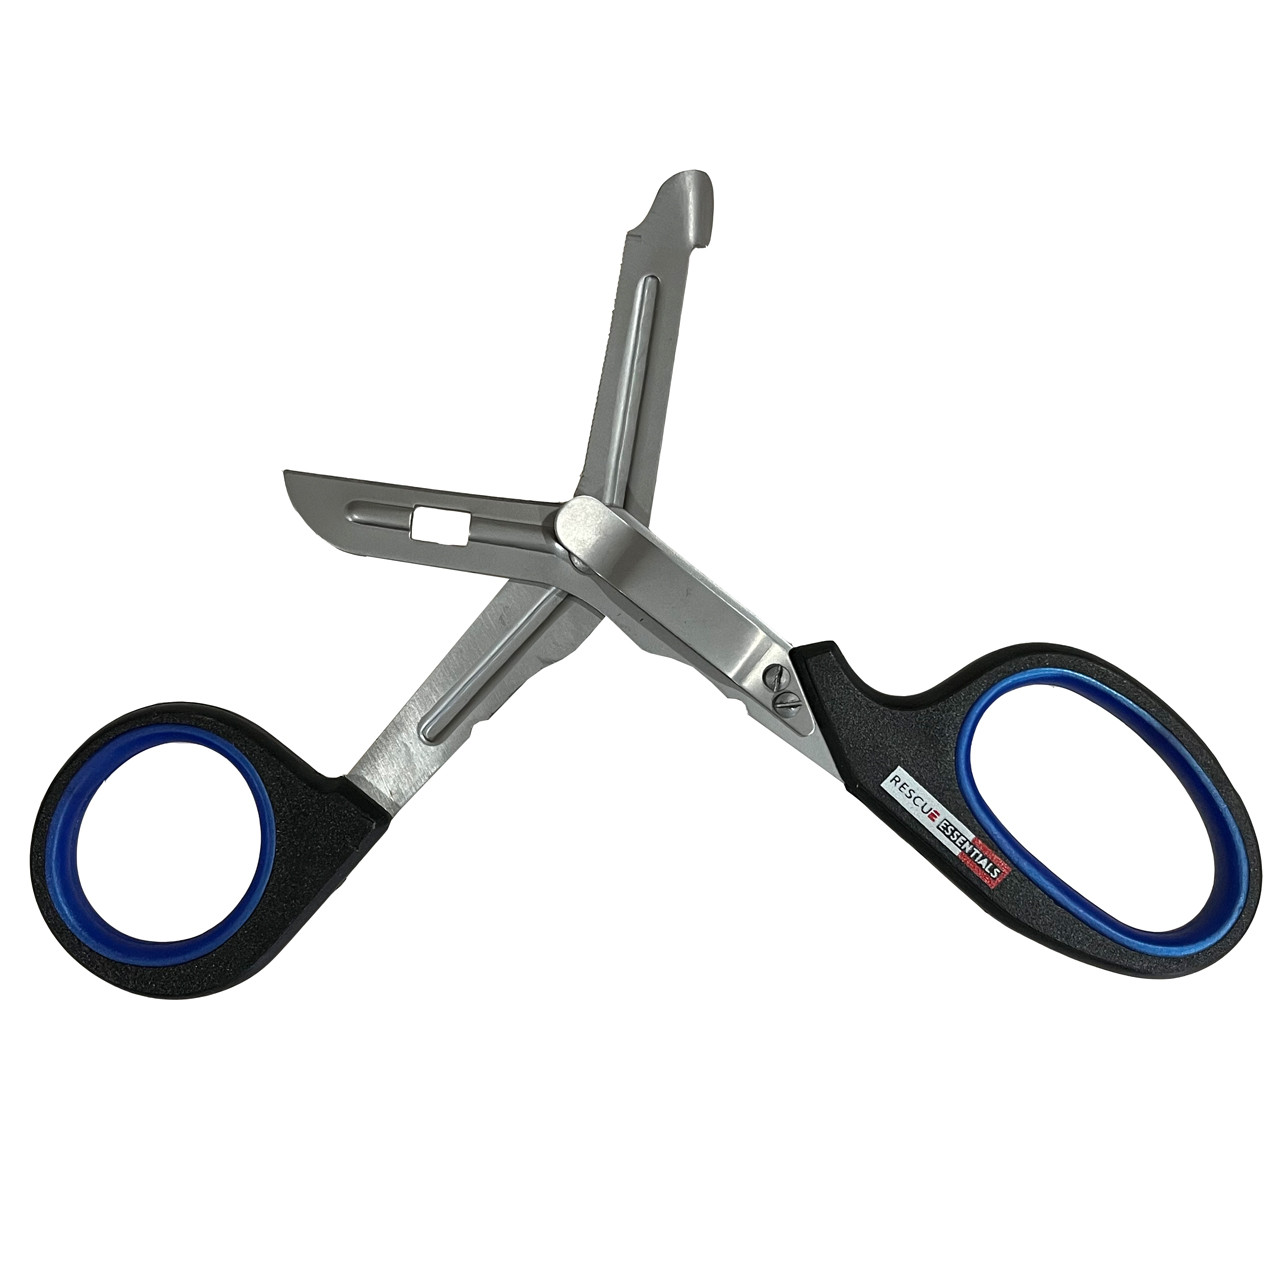 Essentials By Leisure Arts Trimming Scissors 5 With Sheath Bulk